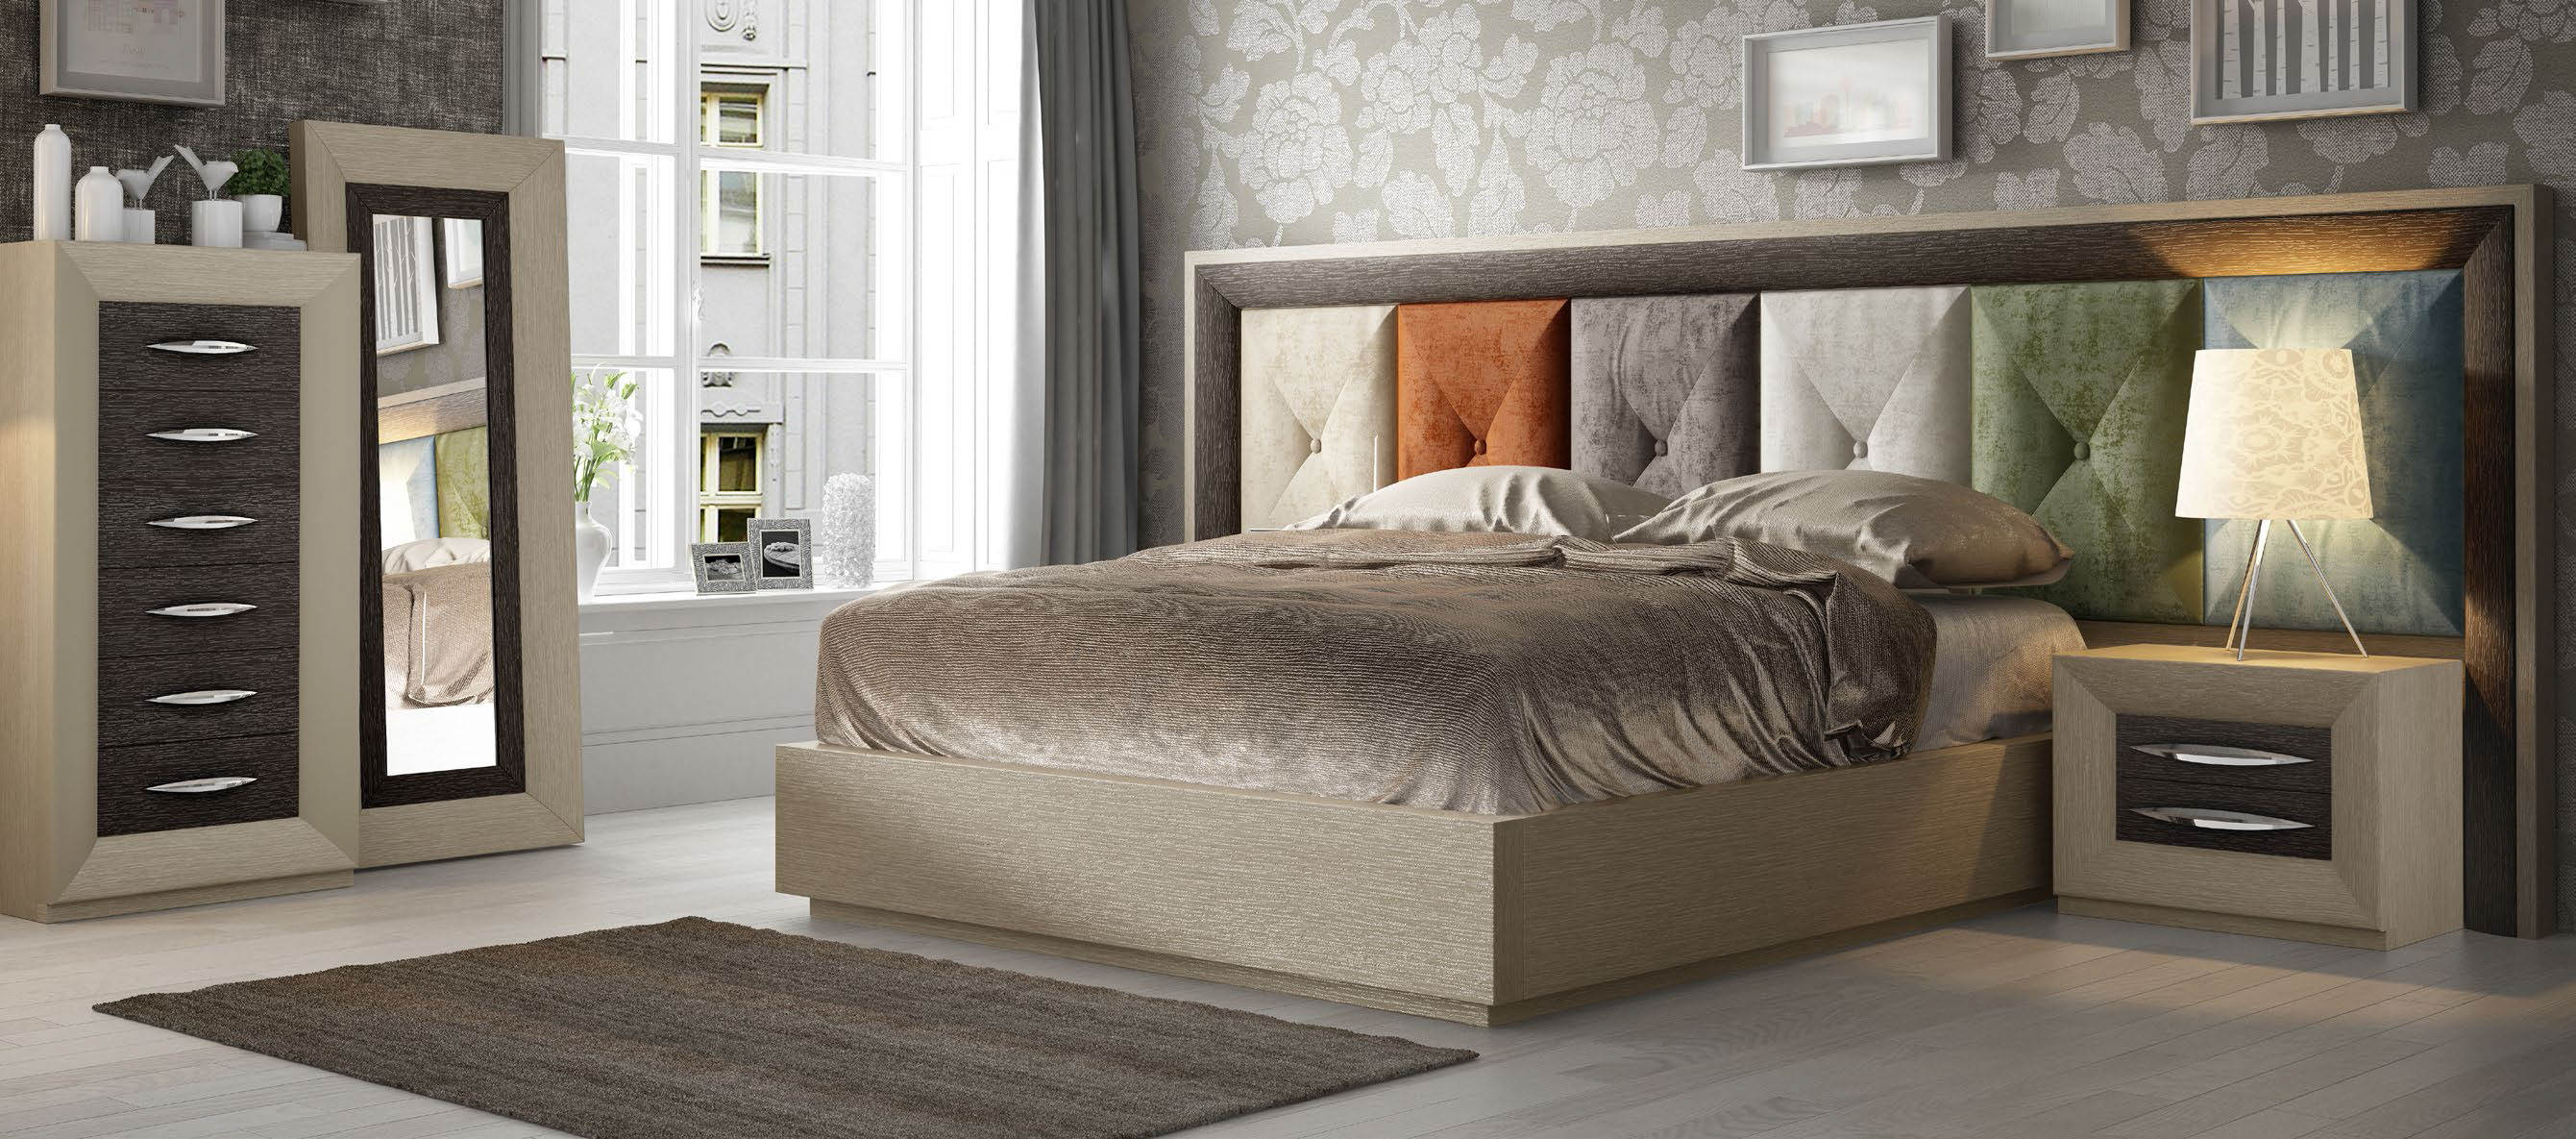 Bedroom Furniture Beds with storage DOR 121